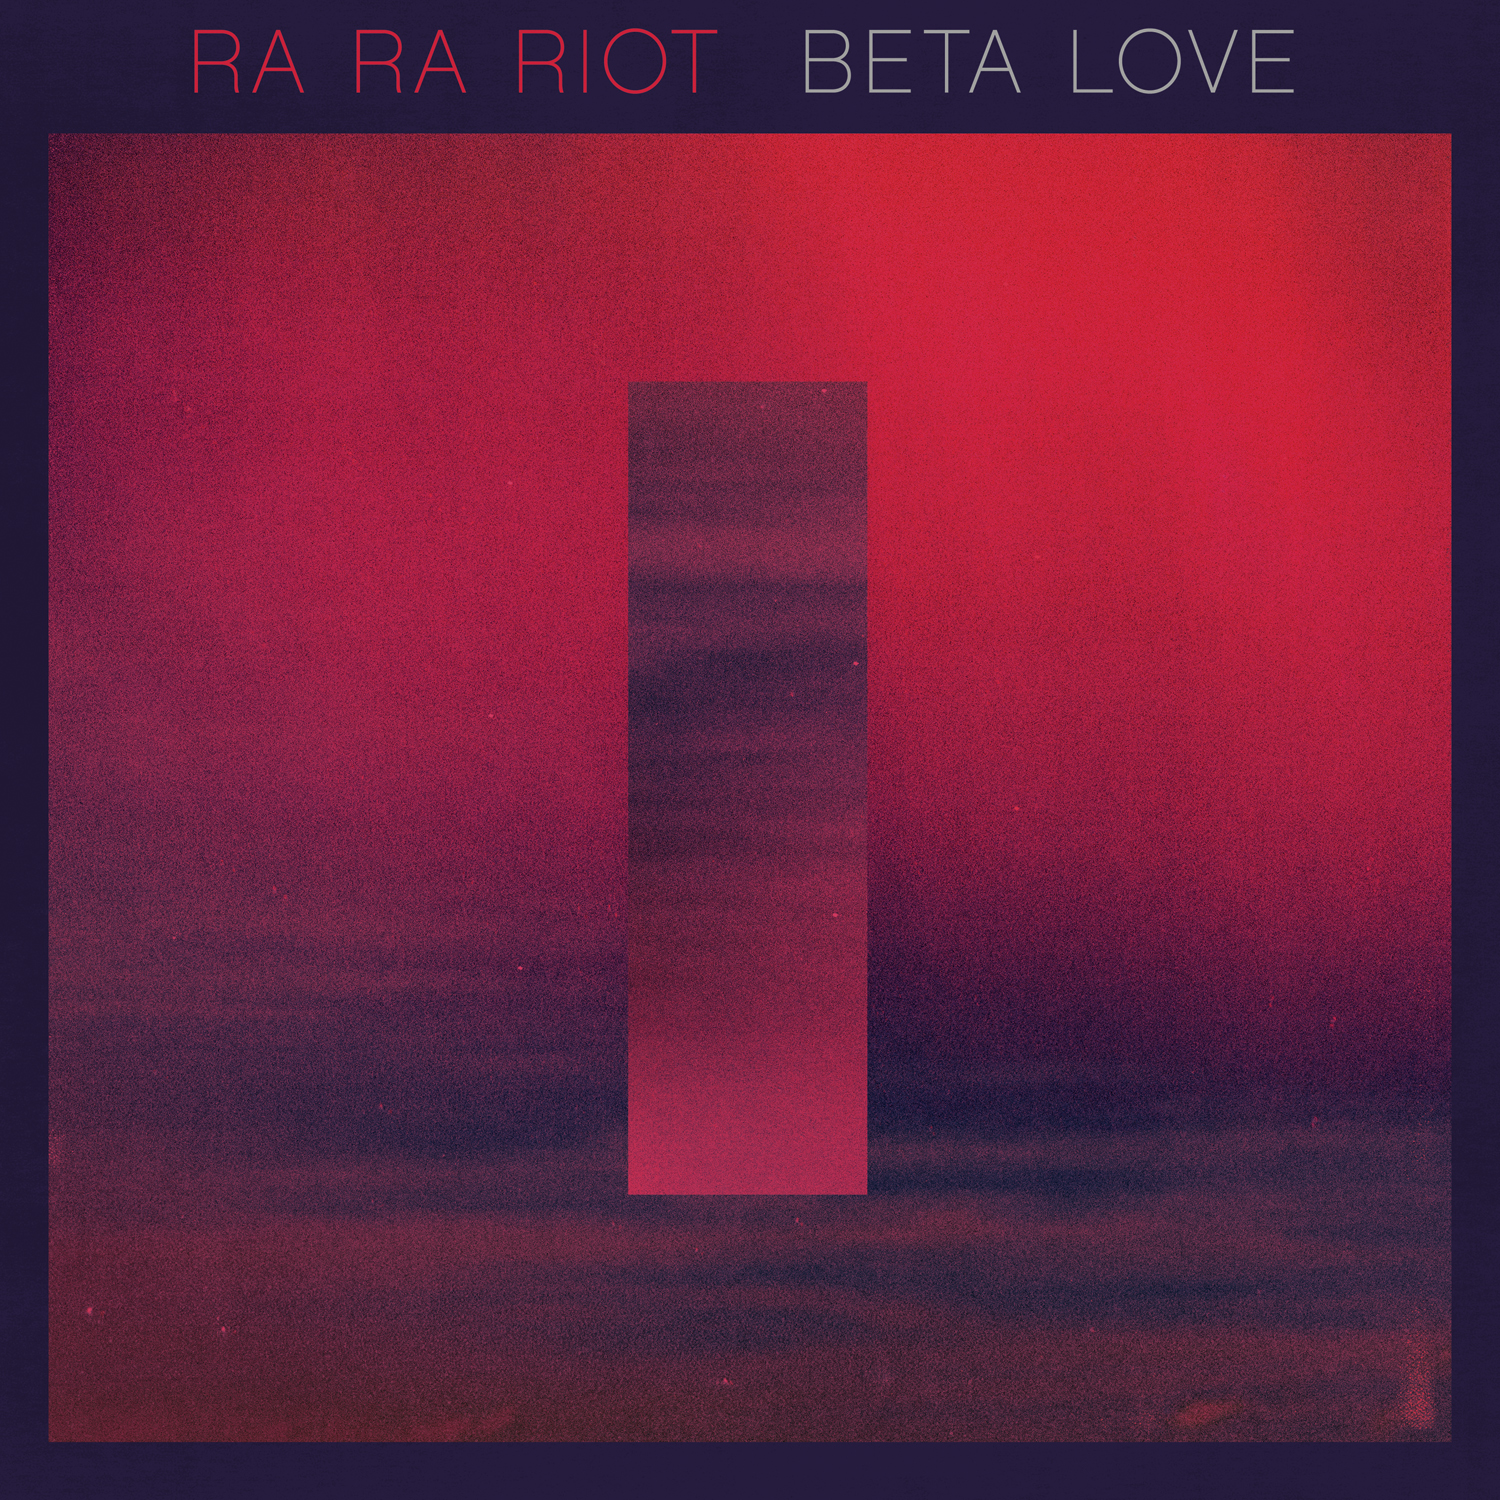 Listen: Ra Ra Riot - “Dance with Me” (Walk the Moon Remix)